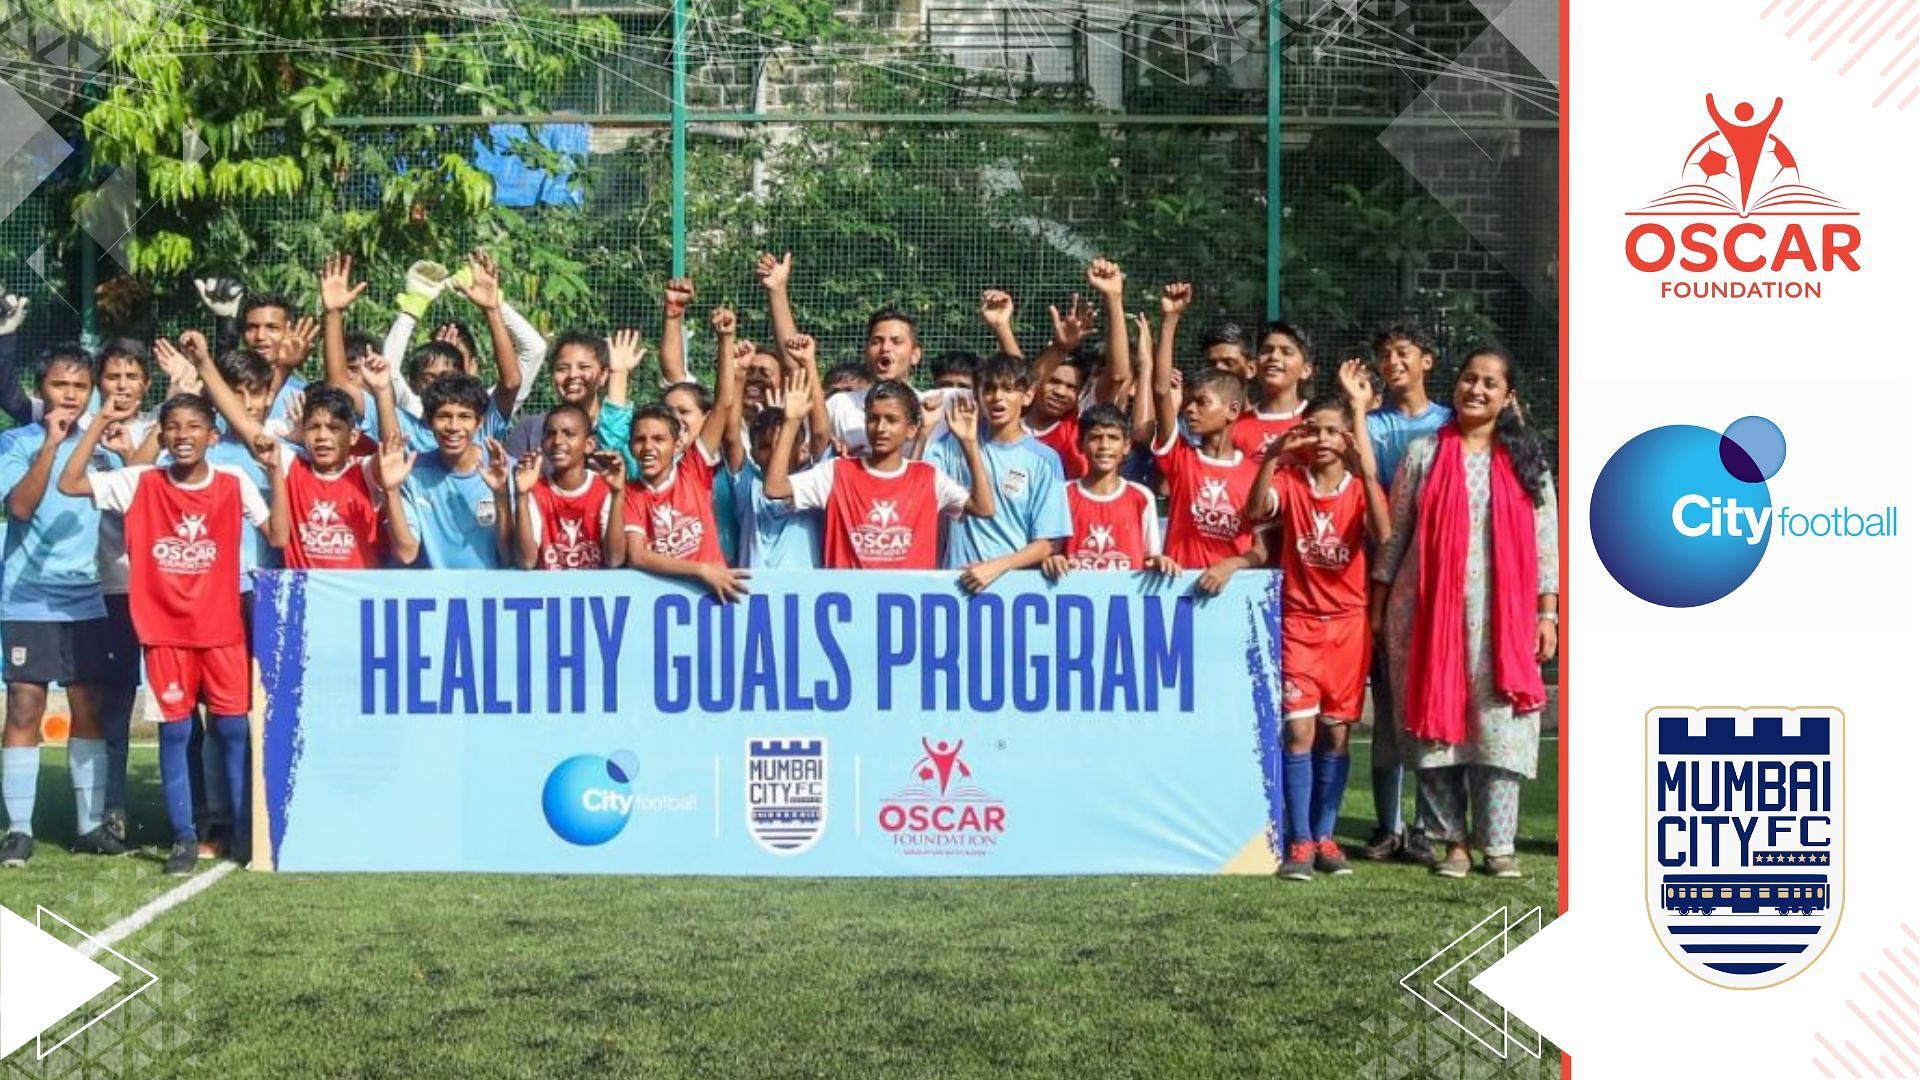 Mumbai City FC and OSCAR Foundation Unite for 